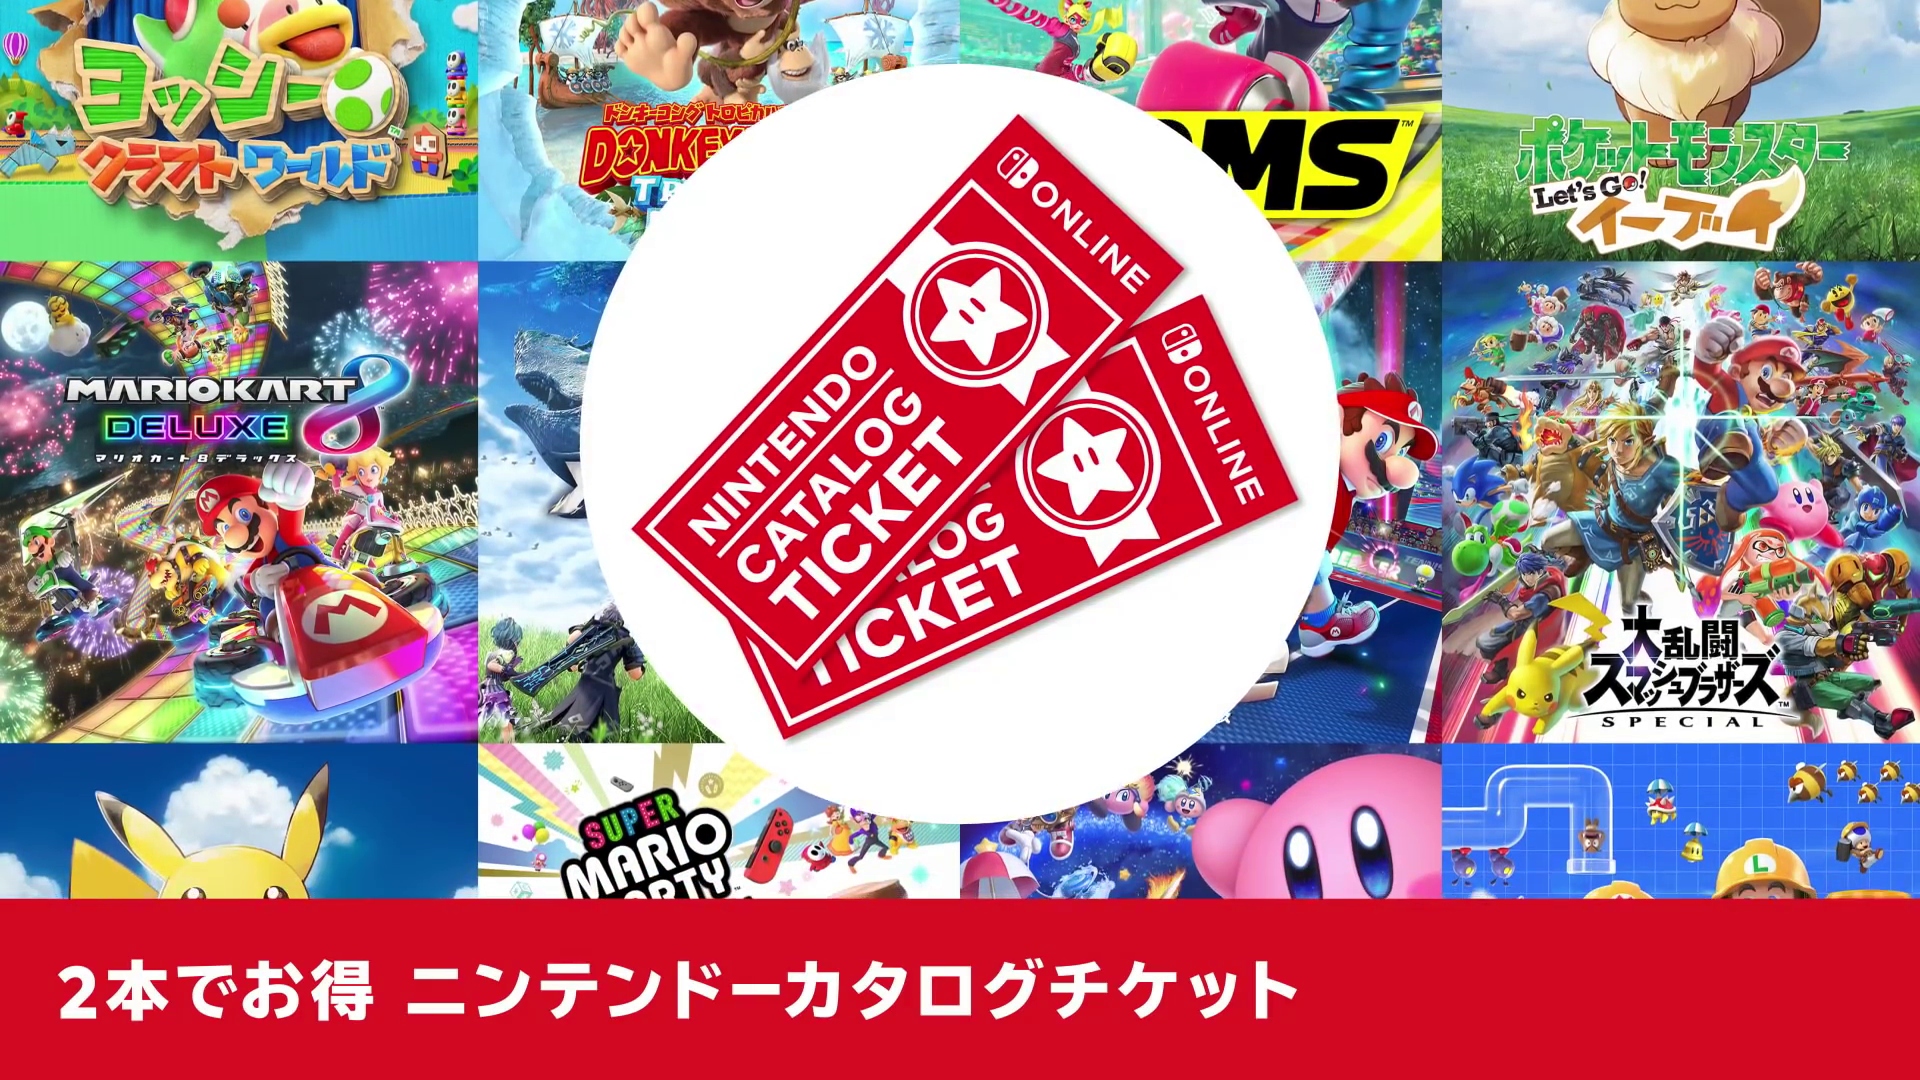 Nintendo Switchの対象ゲーム2本が9980円で購入できるオンライン加入者 